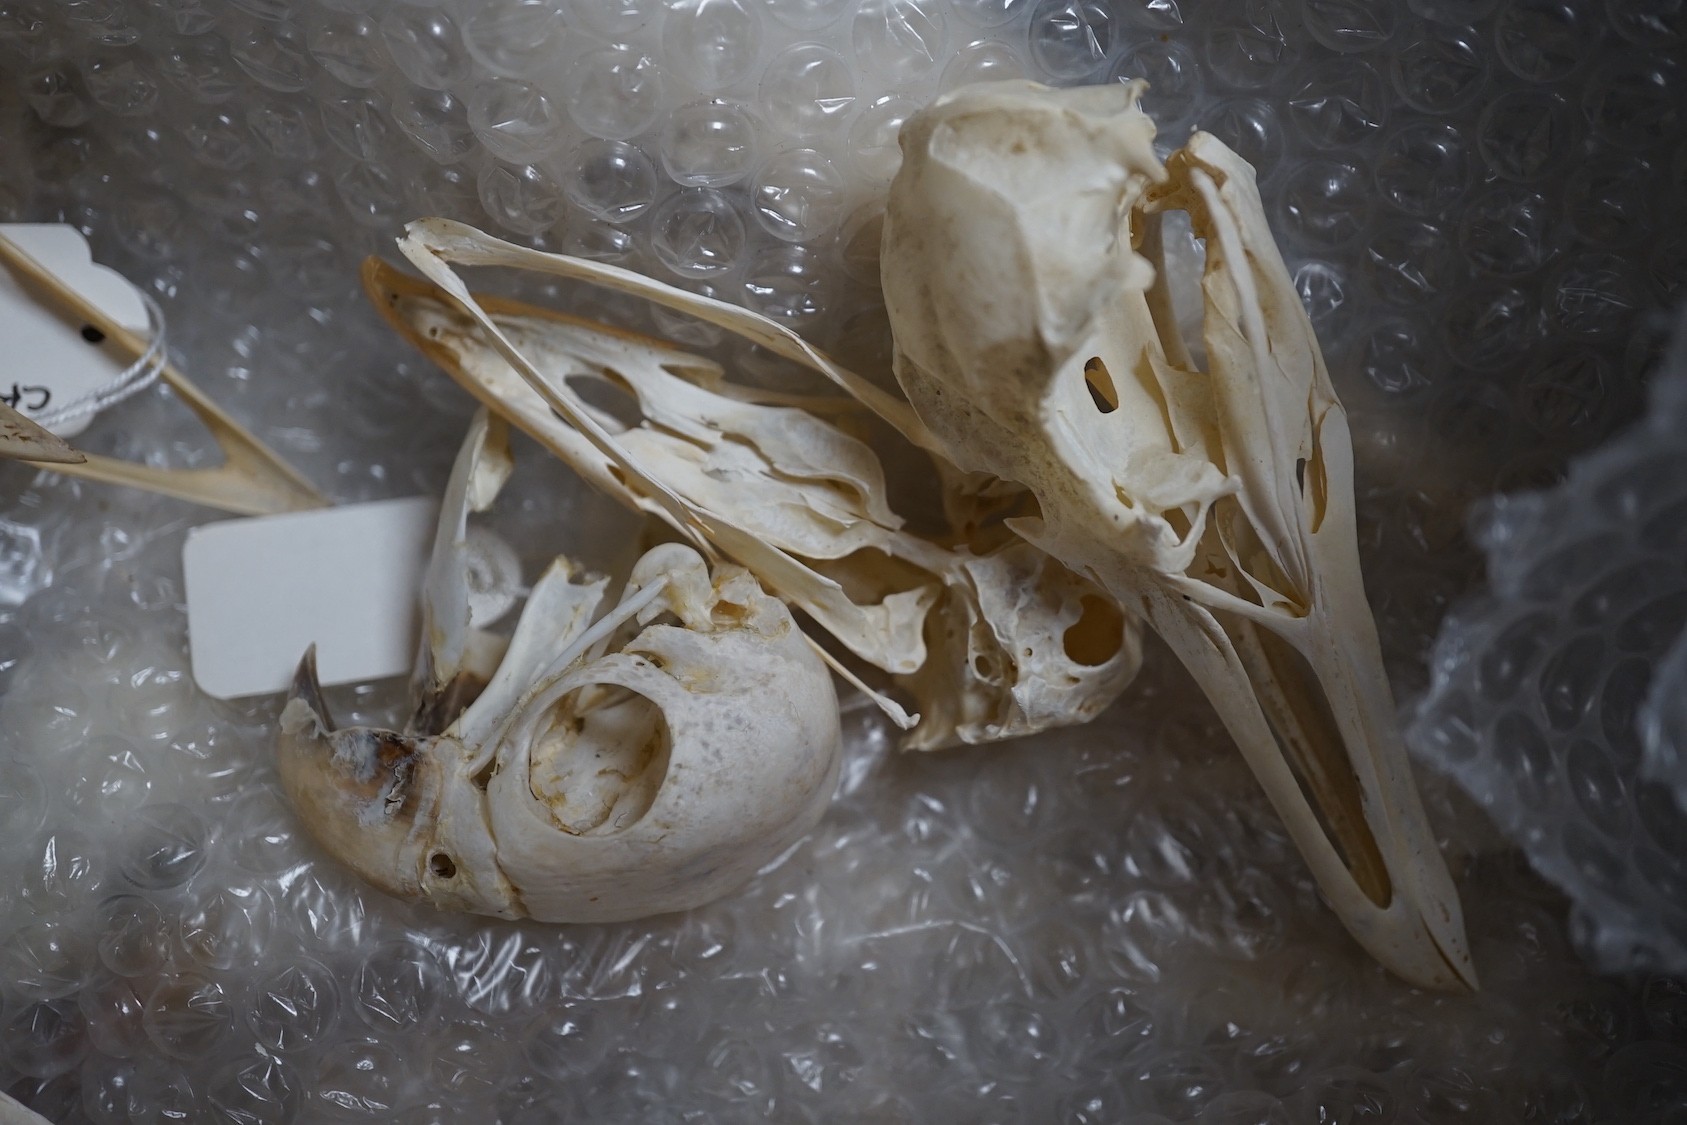 Bird anatomy- a collection of bird skulls, the largest 18 cm